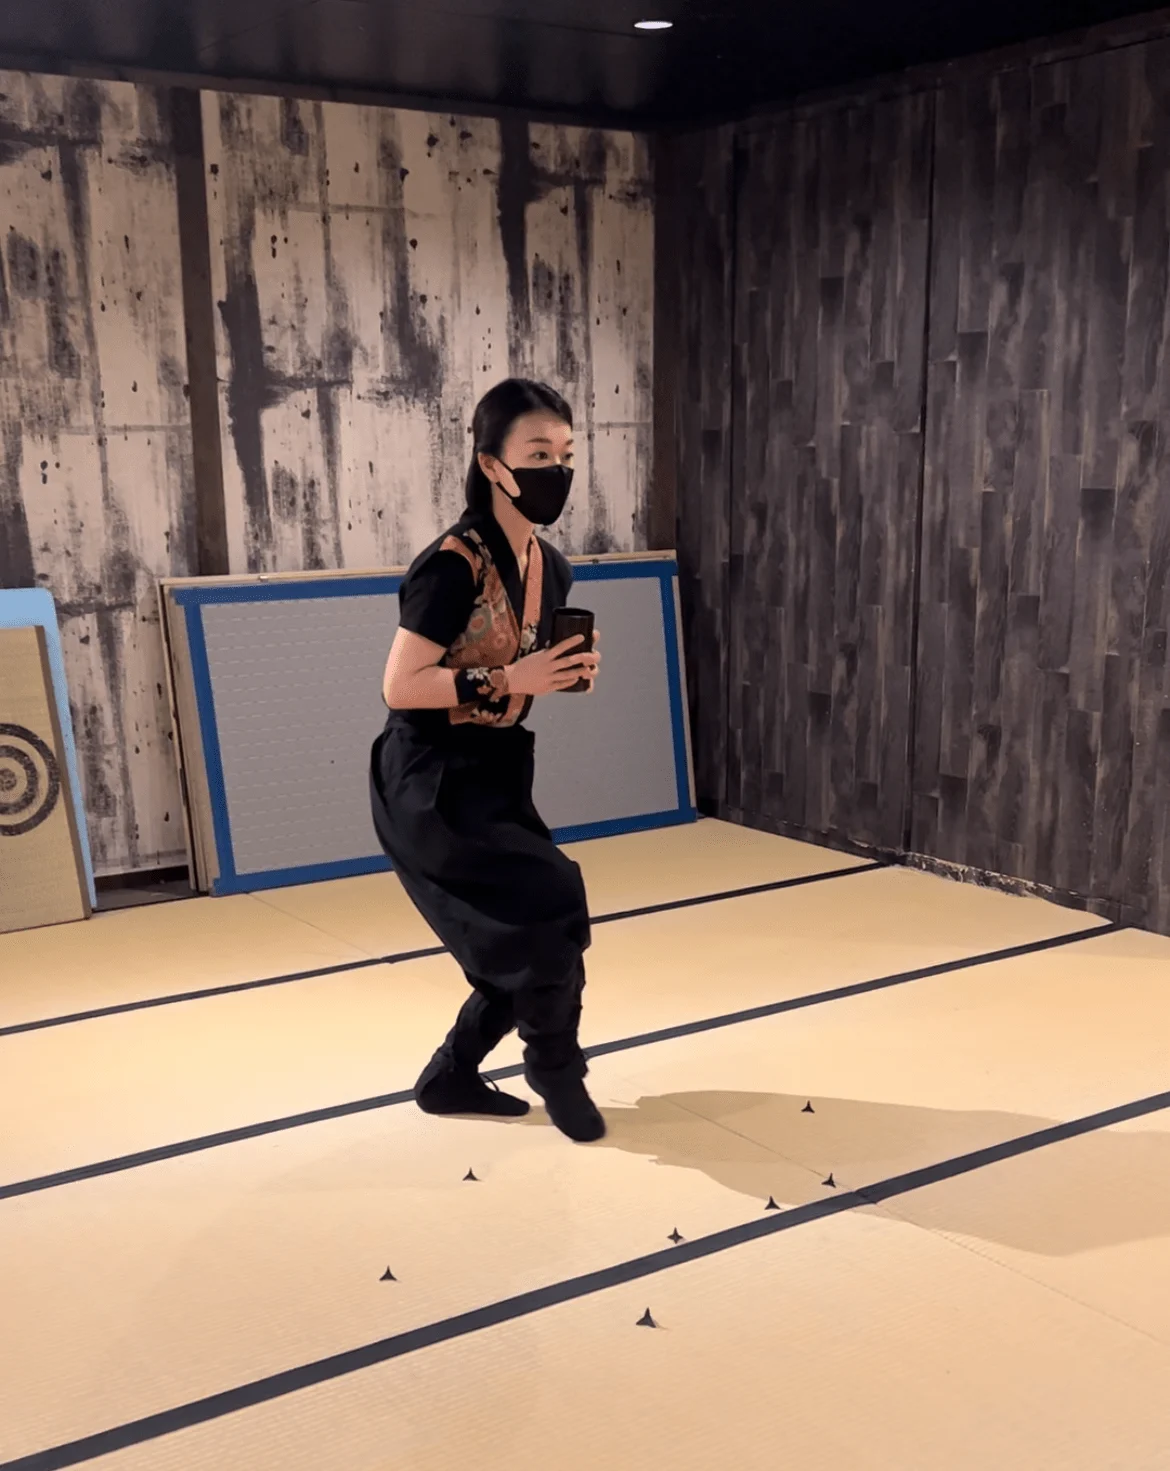 Ninja instructor dodging obstacles on floor